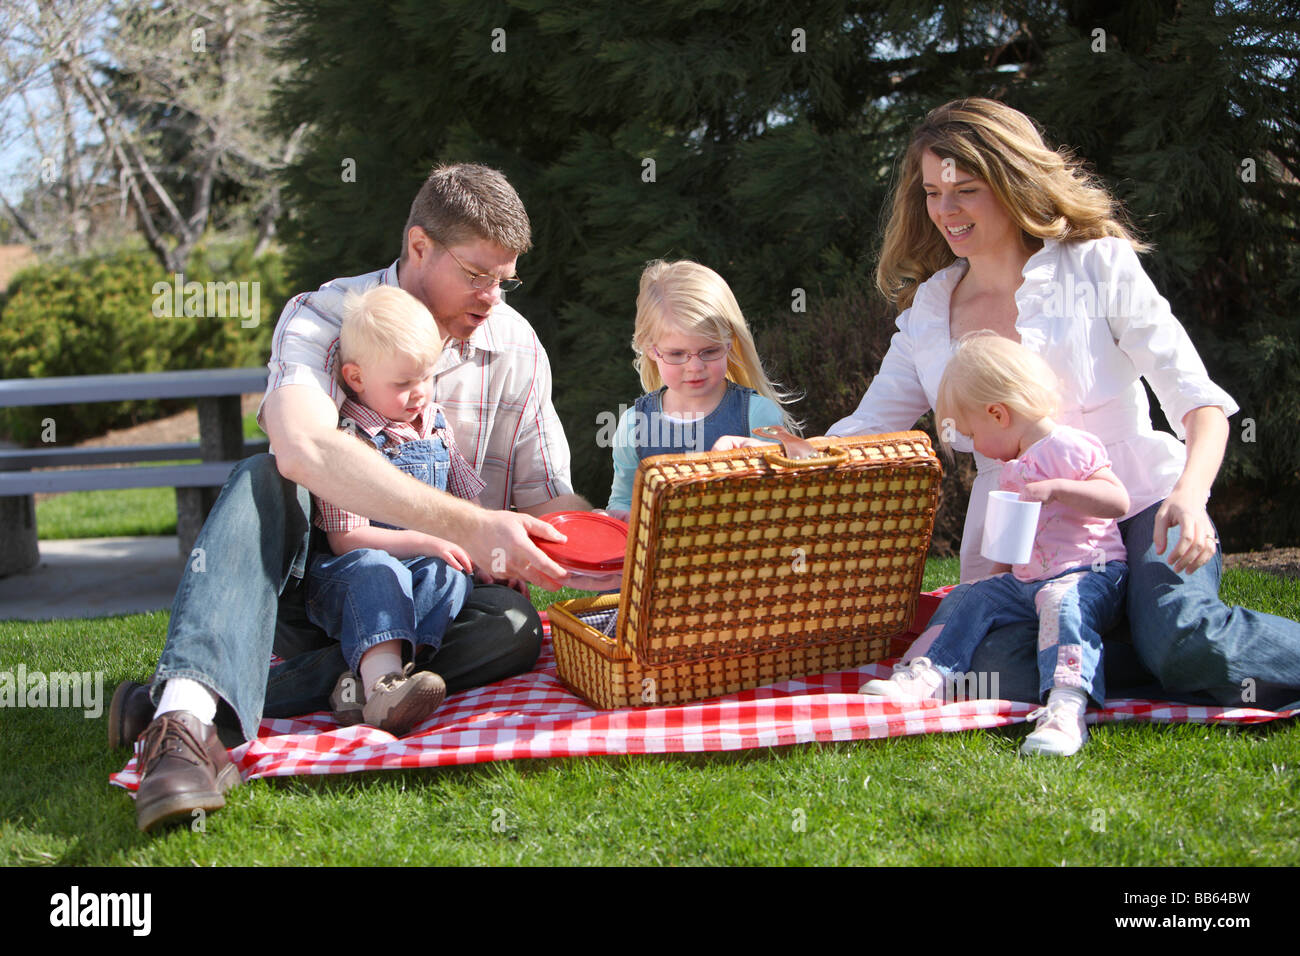 Family having a picnic at the park Stock Photo